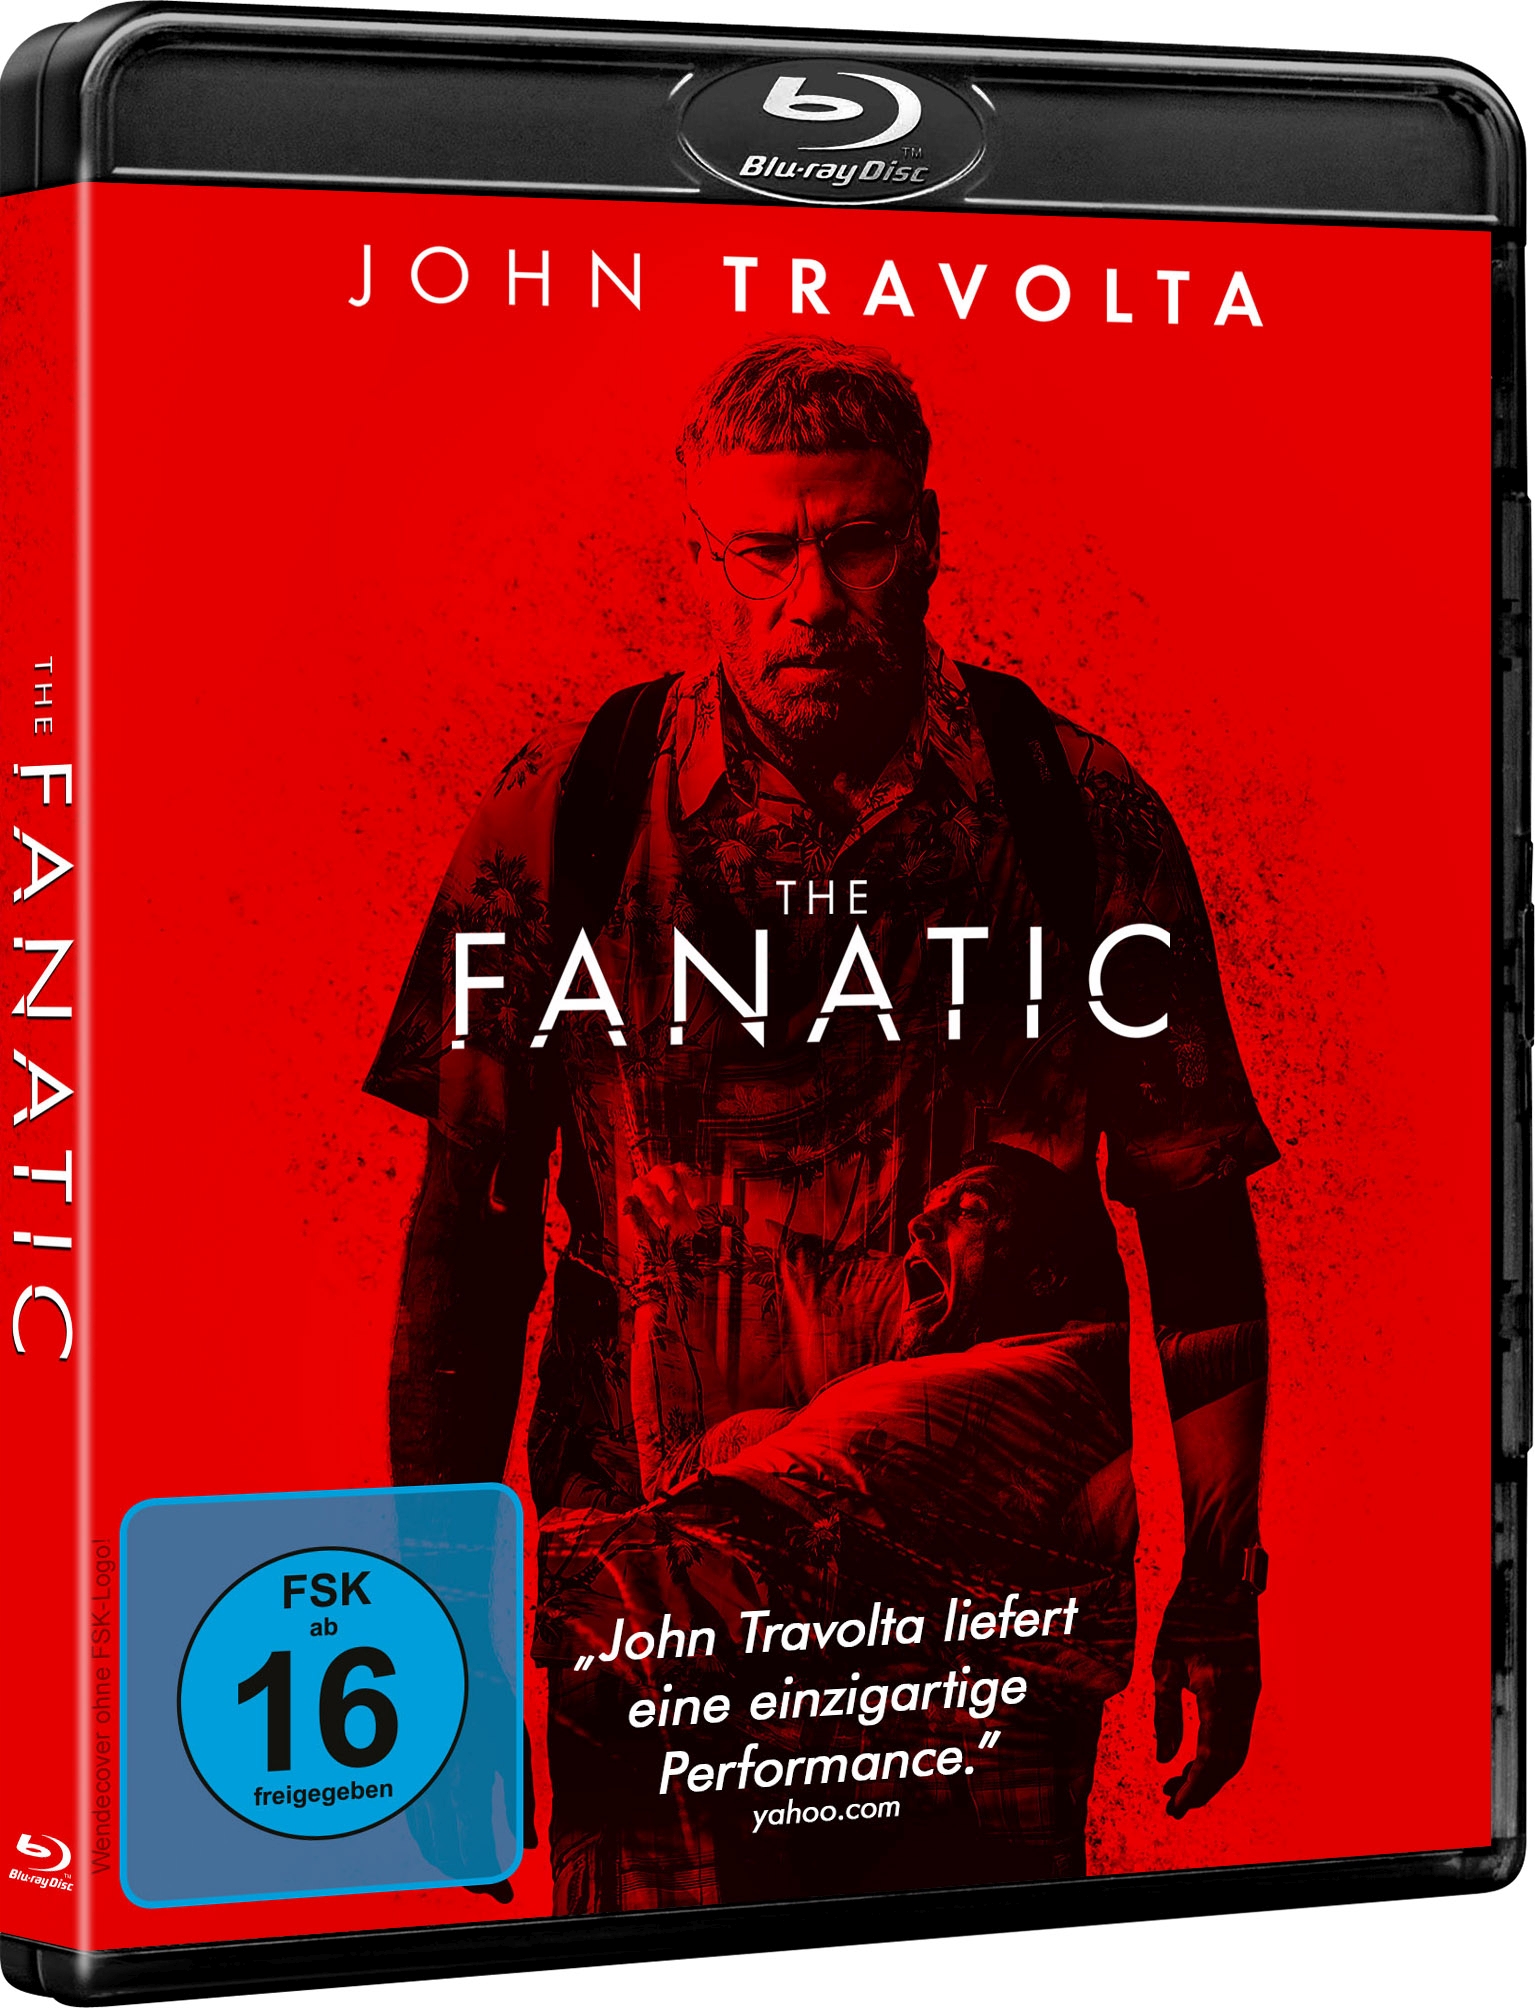 The Fanatic (Blu-ray)  Image 2